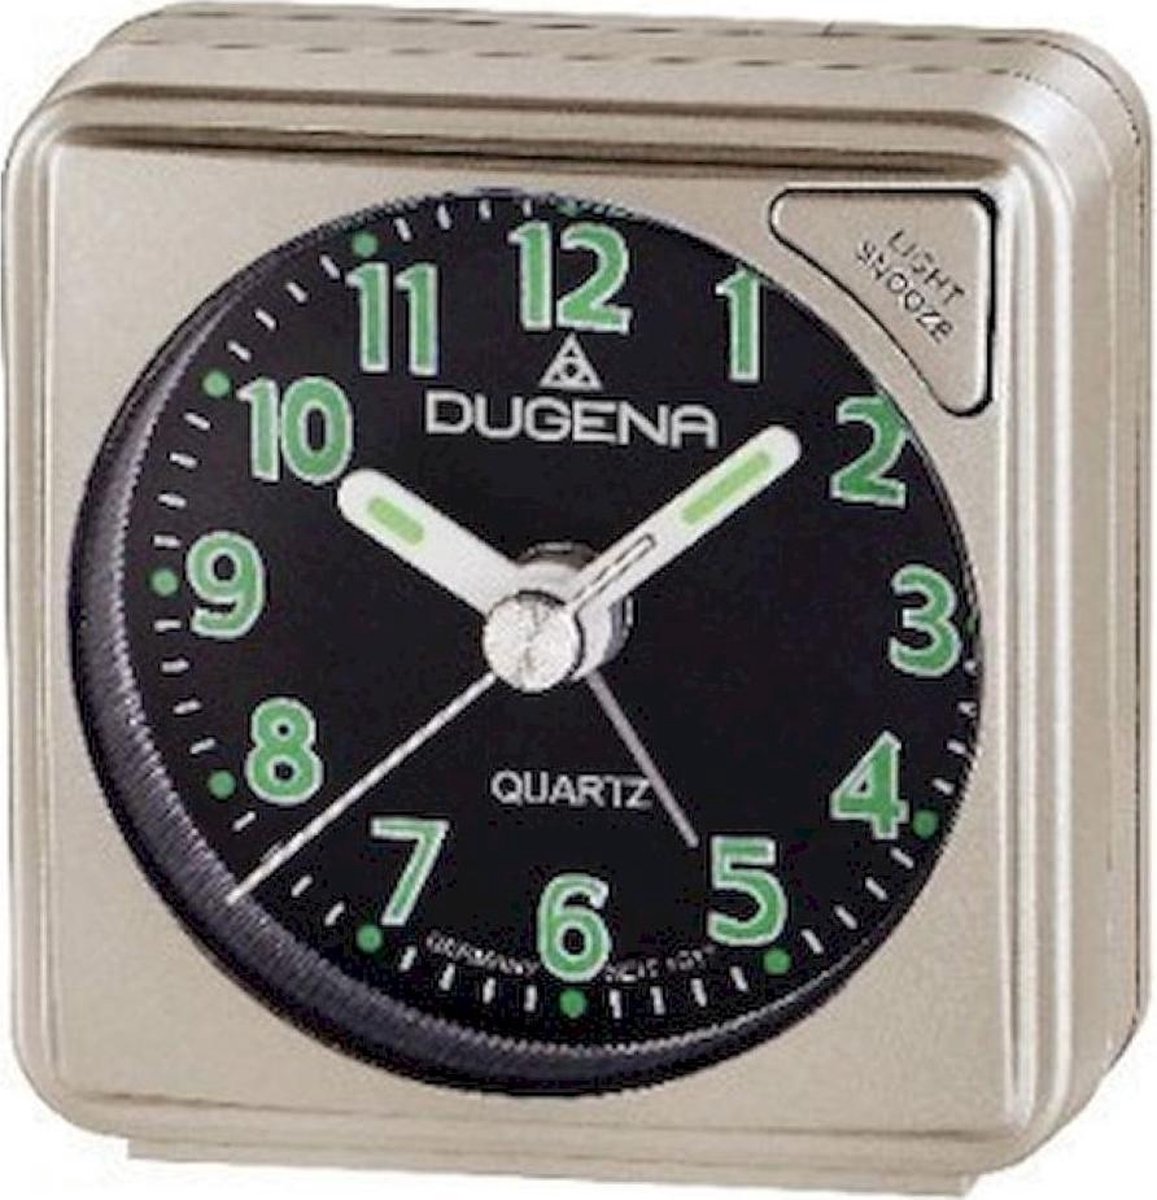 Dugena - 4460614 - Quartz -